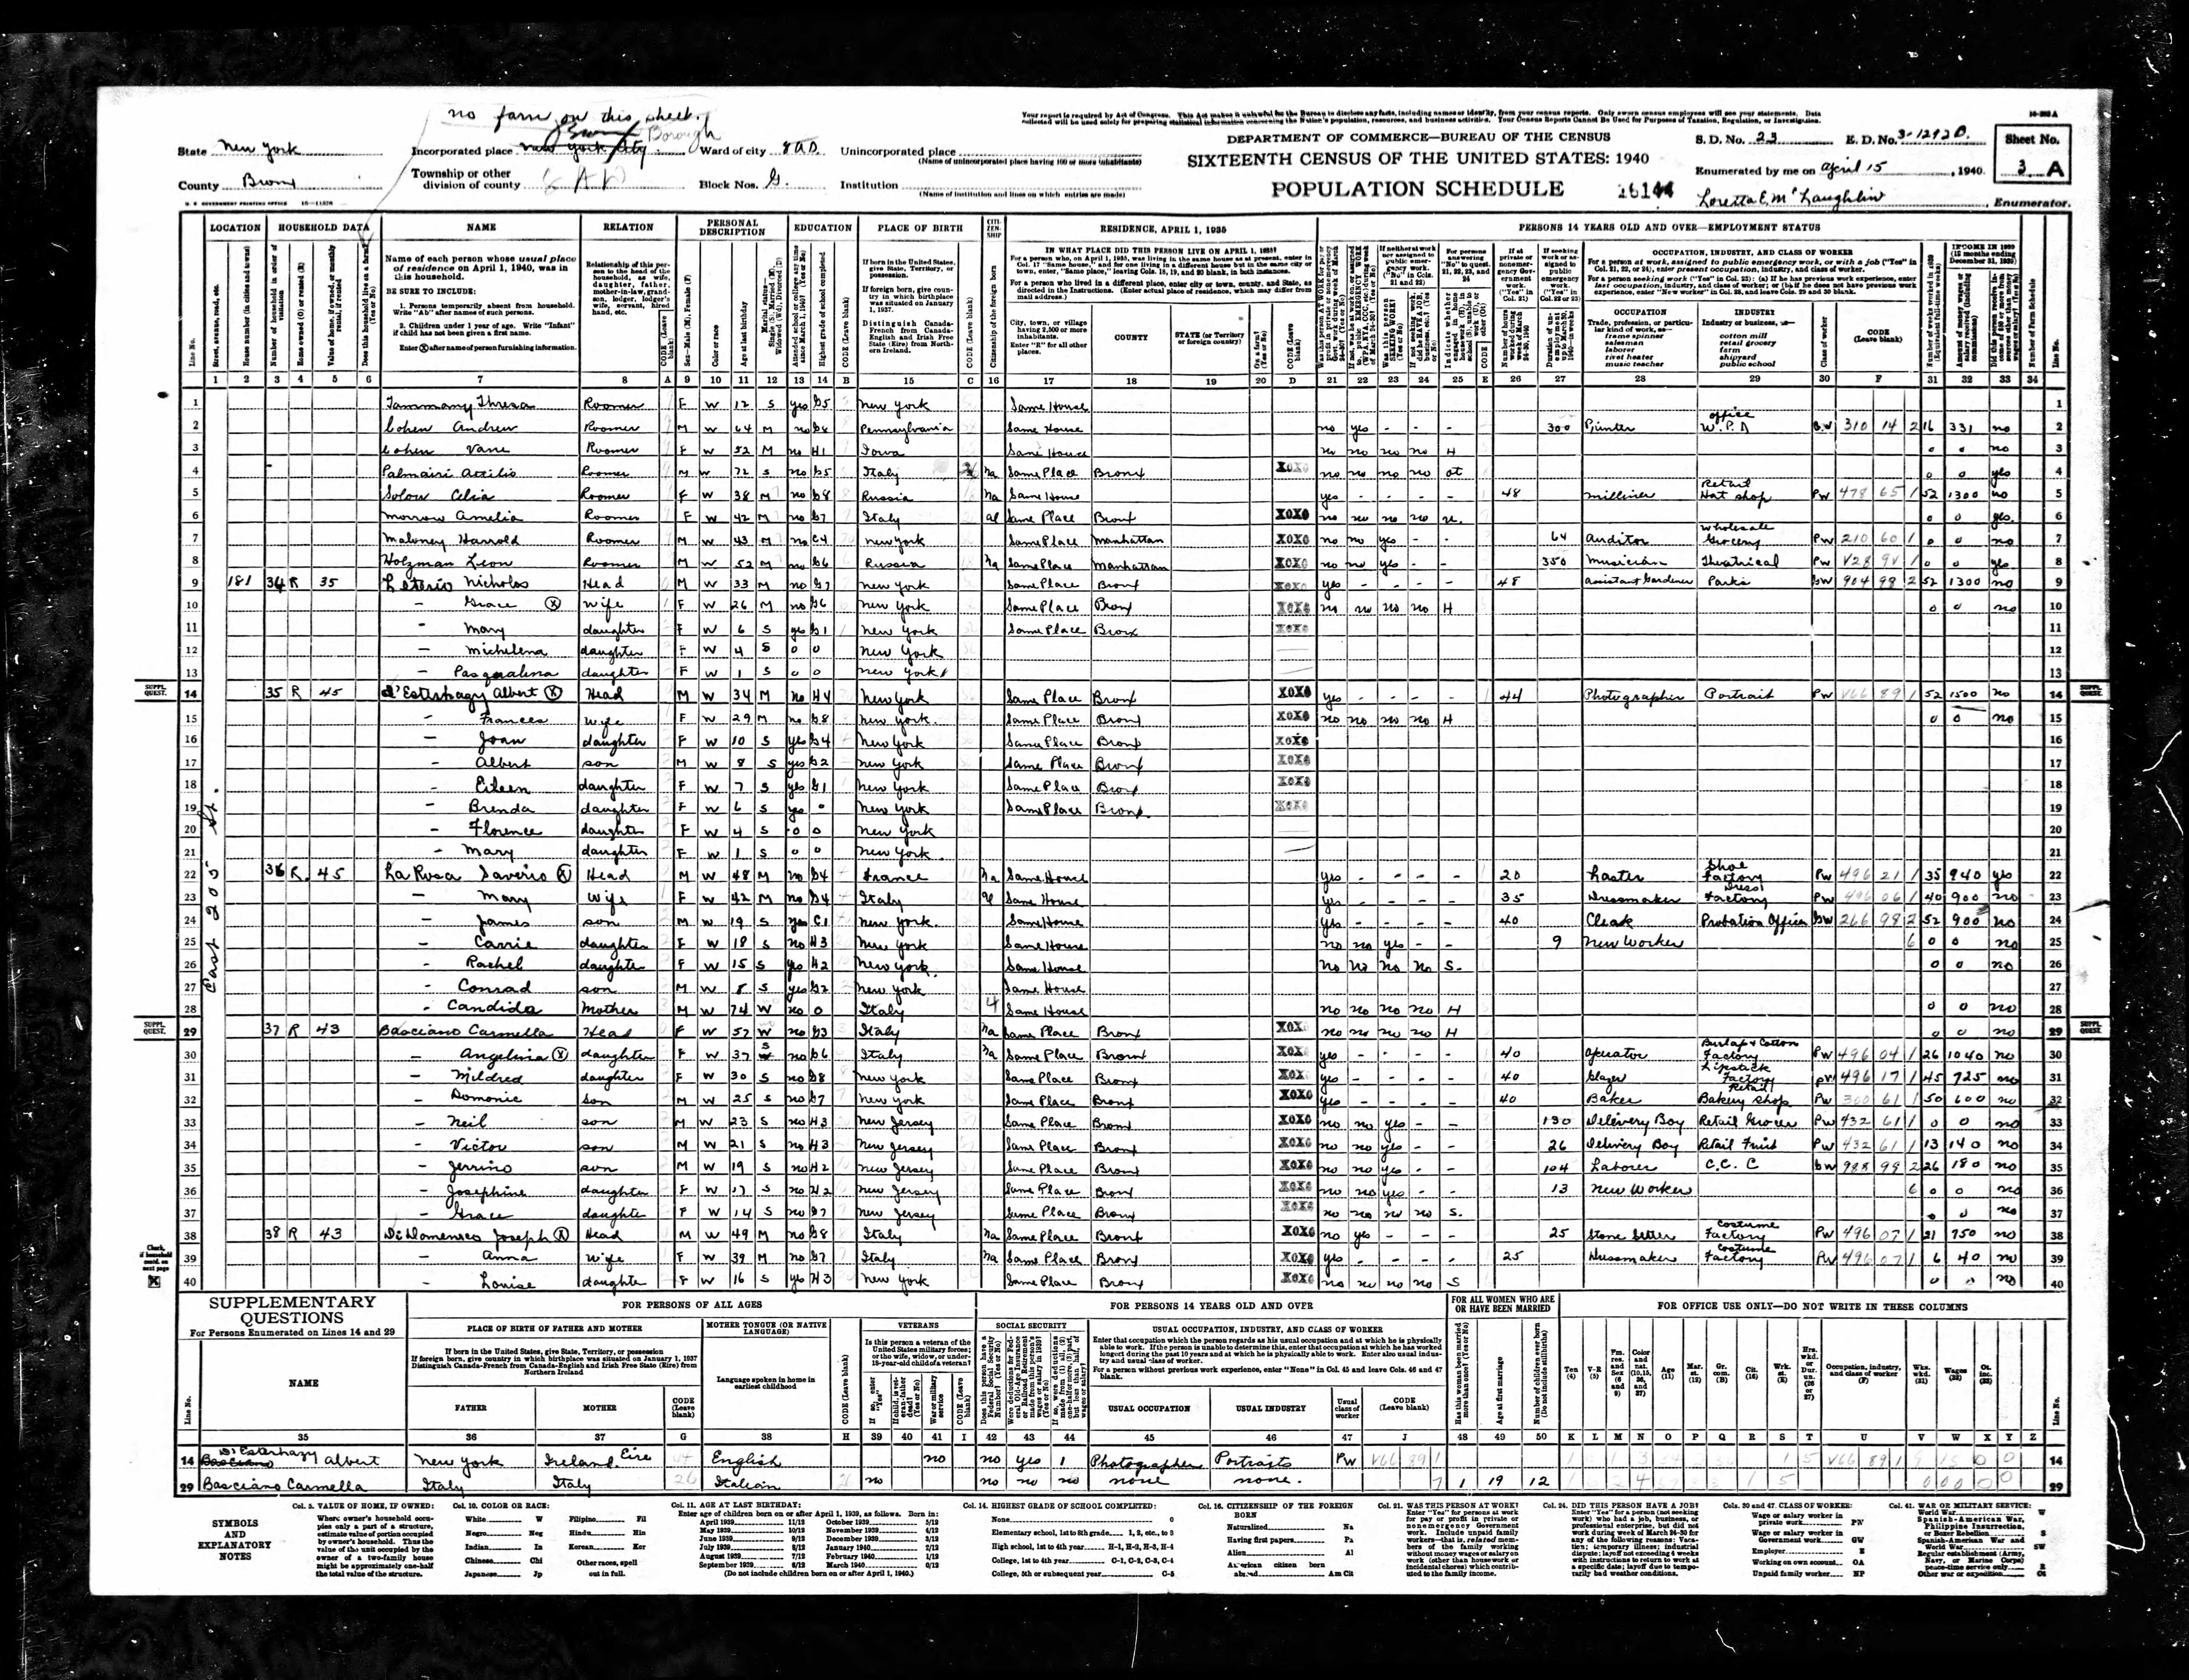 Leon Holzman in 1940 census